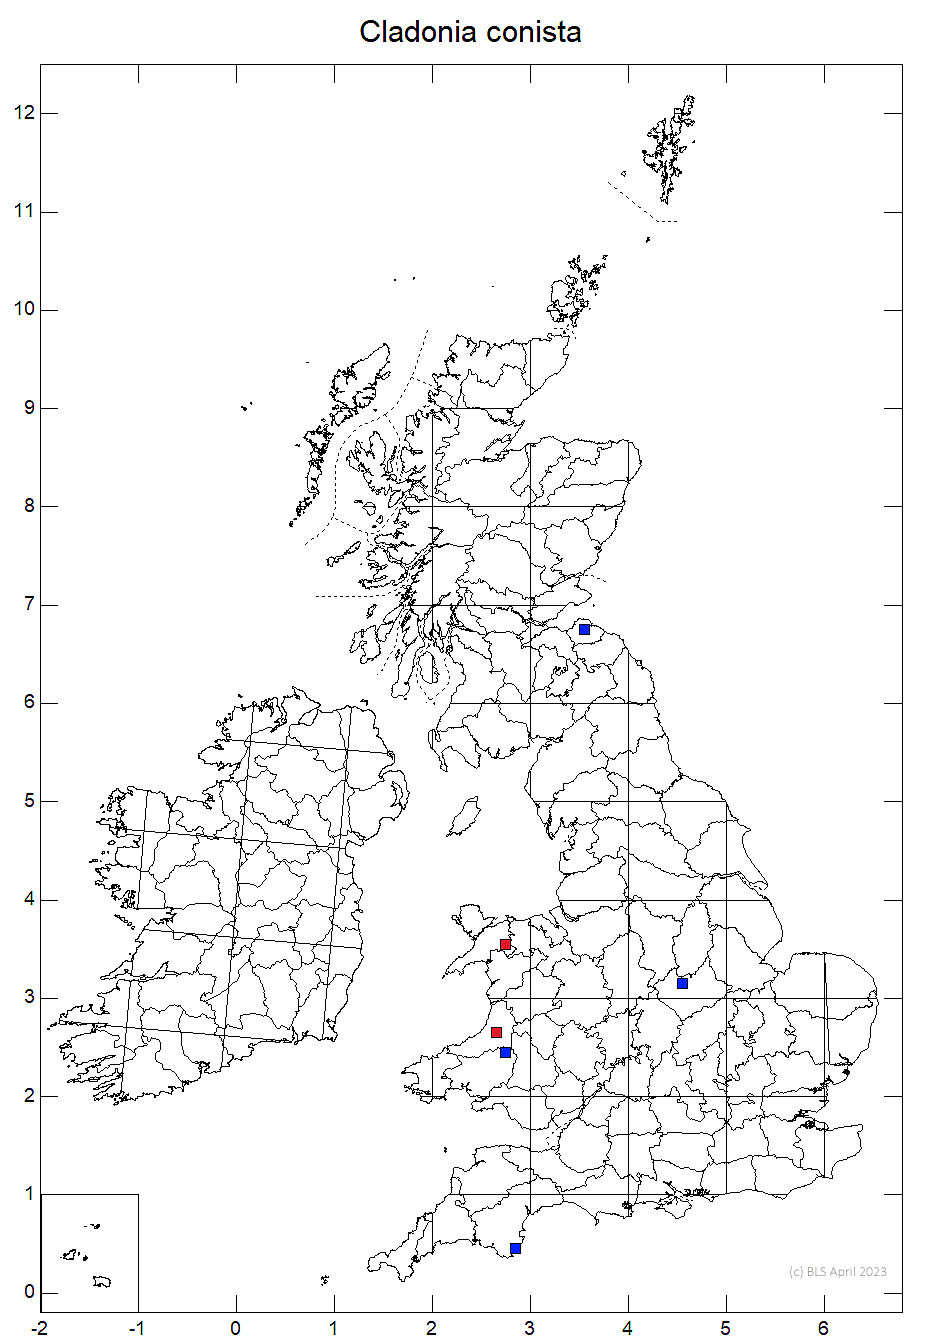 Cladonia conista 10km sq distribution map